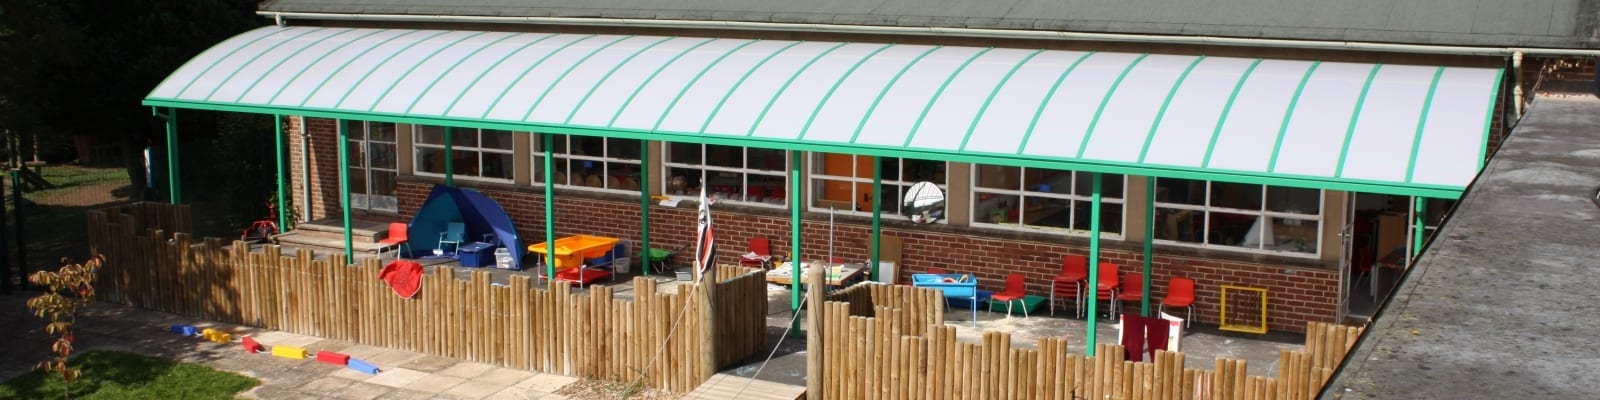 Ludlow Infant School Green Canopy